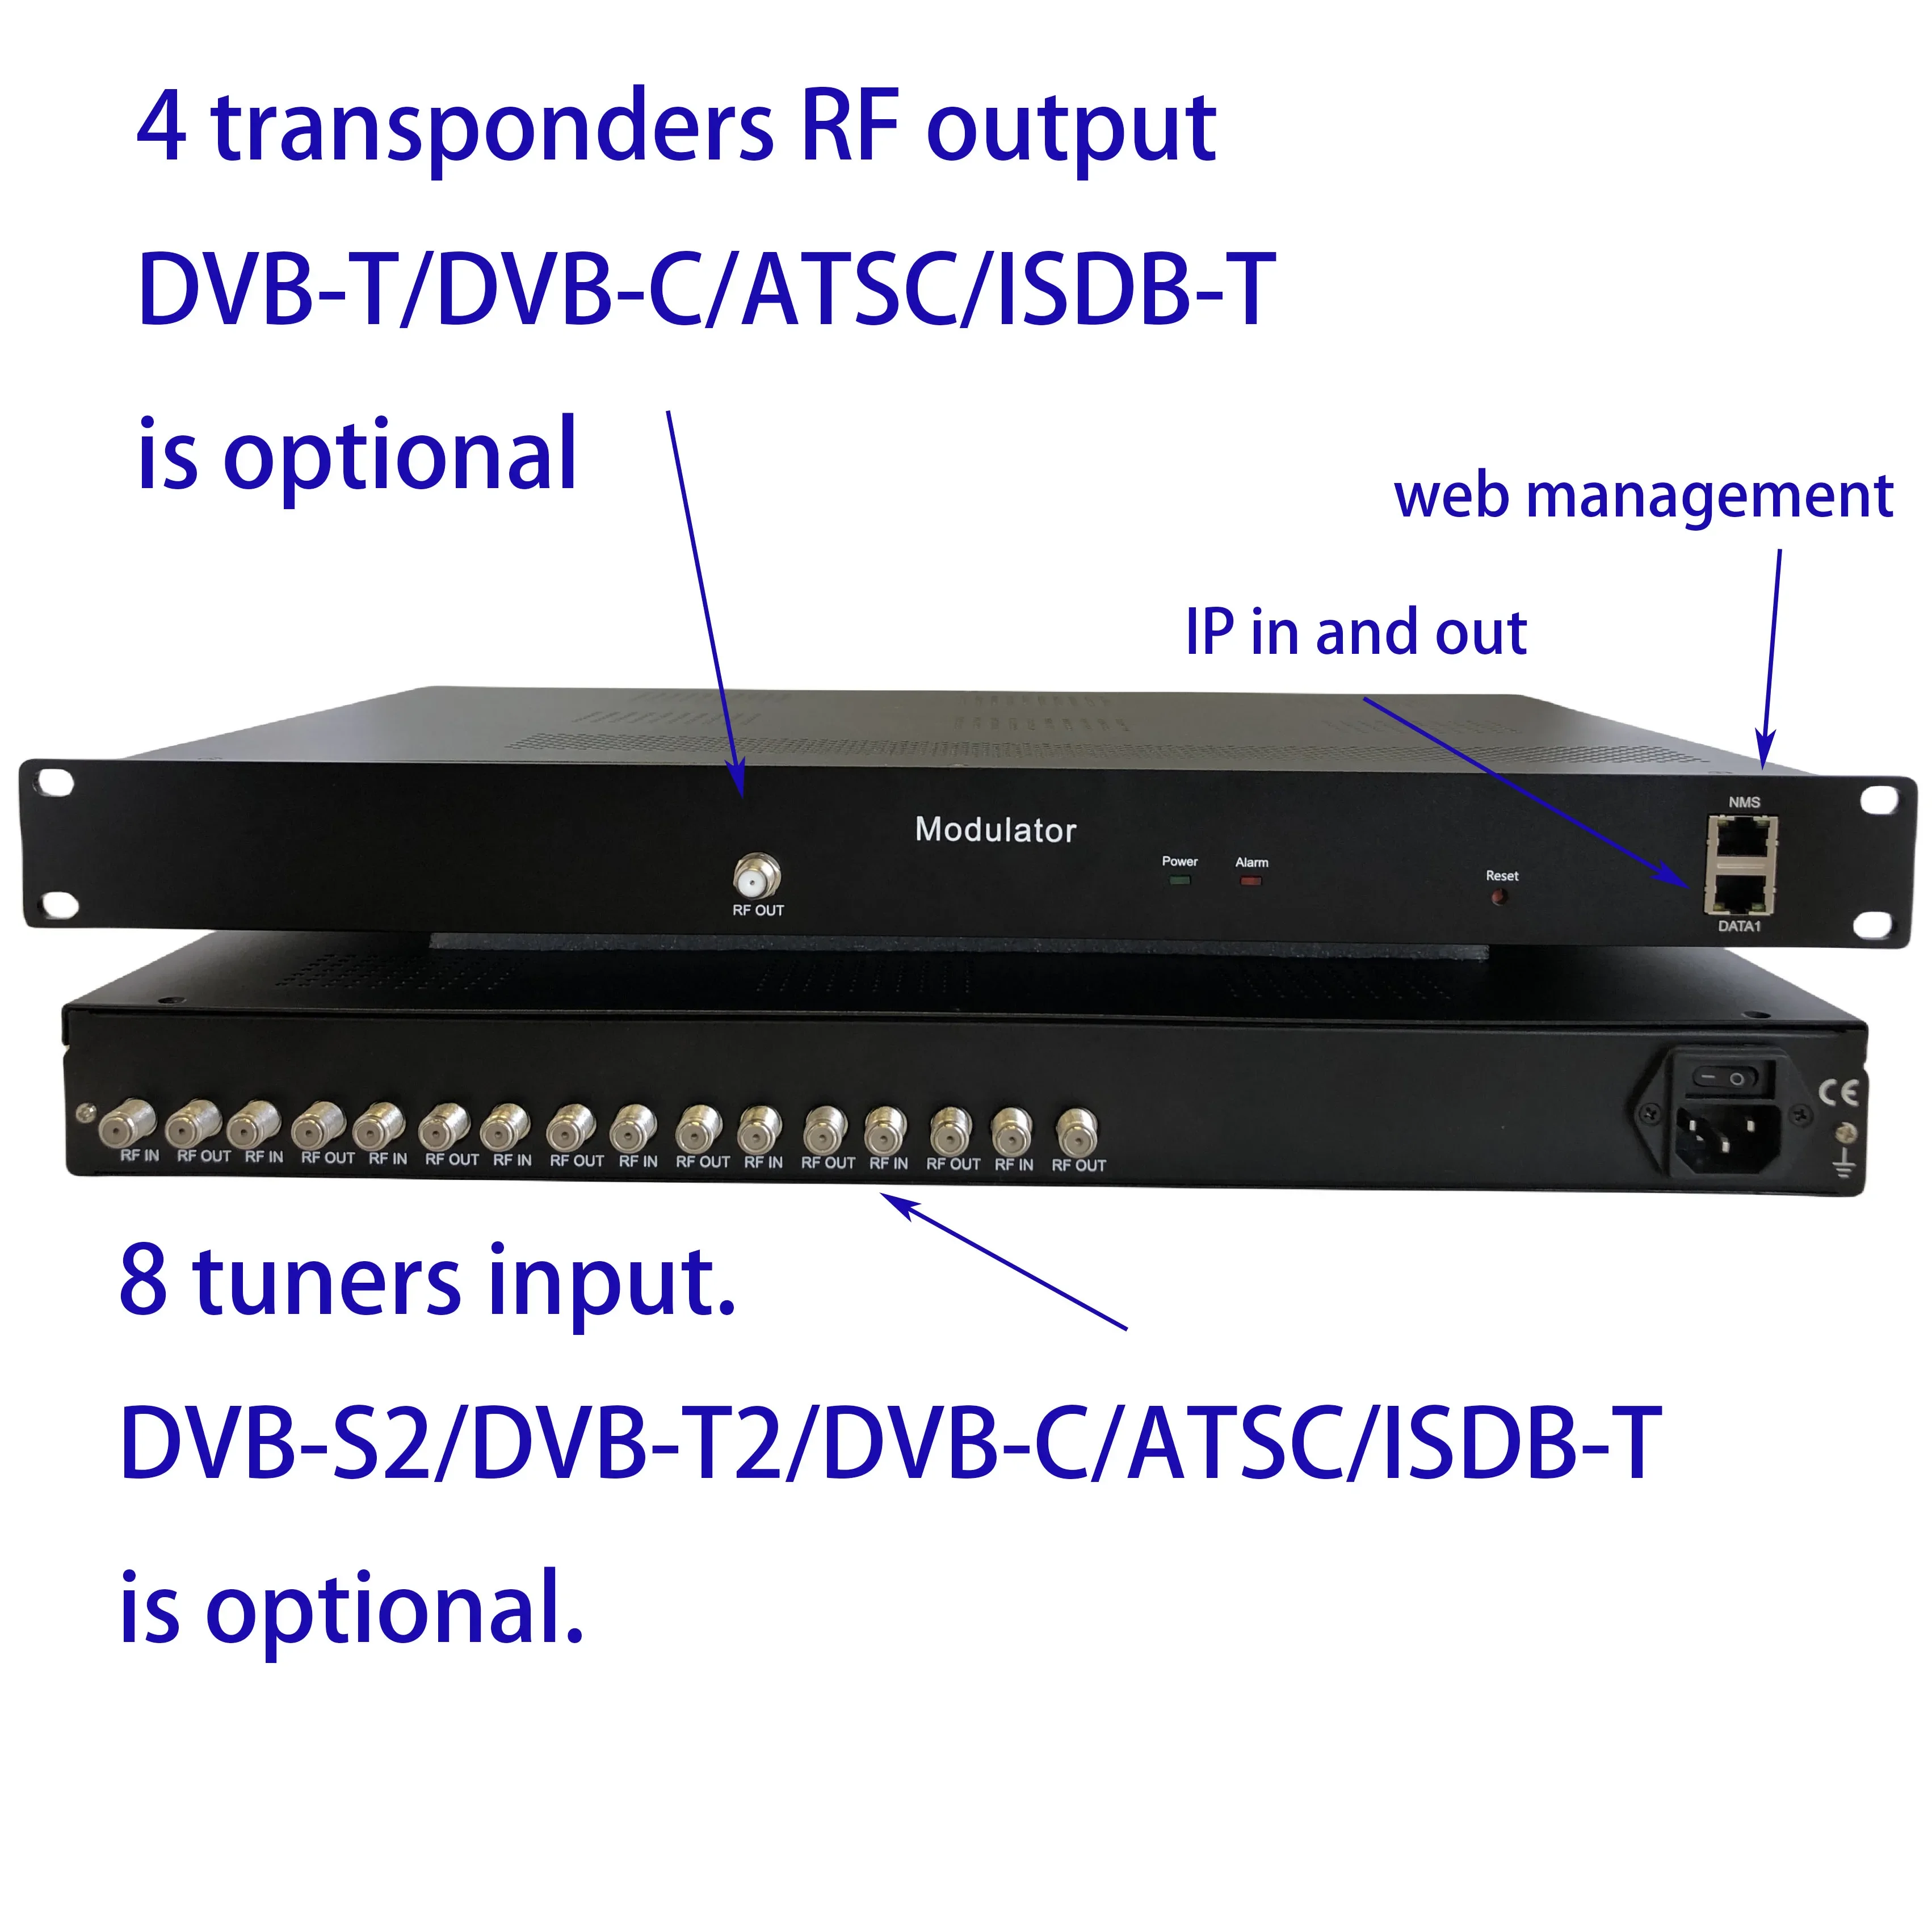 

8 way dvb-s2 to DVB-T/DVB-C/ATAC/ISDB-T digital catv modulator, ATSC to ATSC modulator, ISDB-T to ISDB-T RF modulator